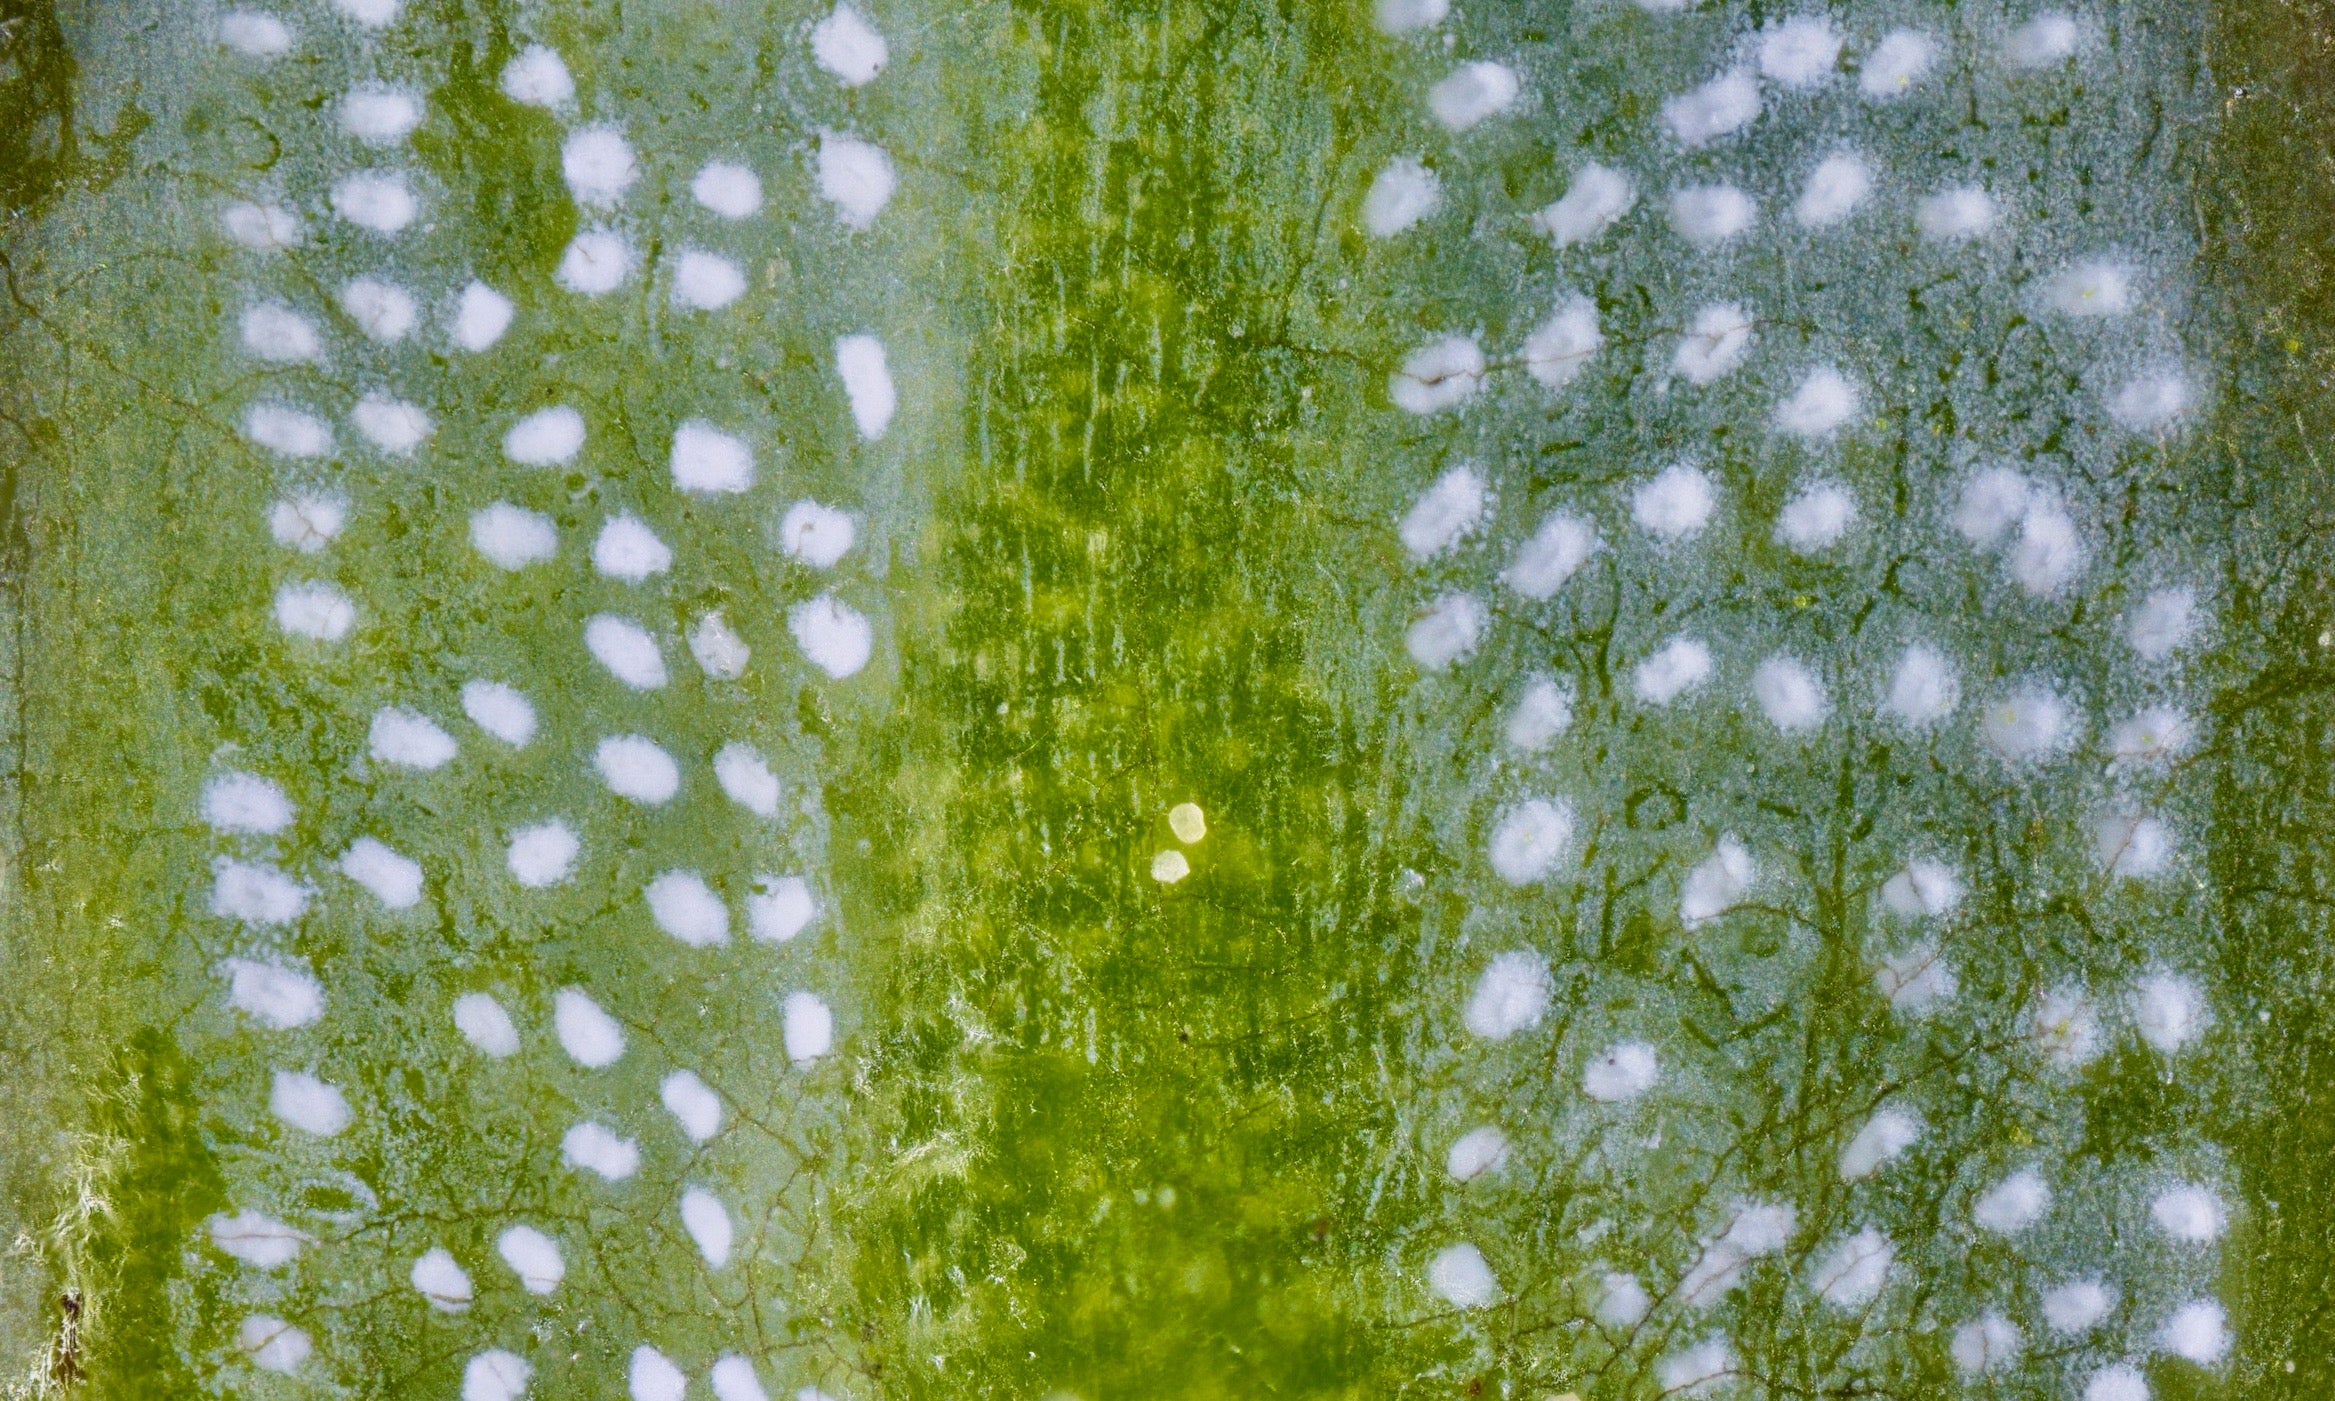 wax on redwood leaf surface